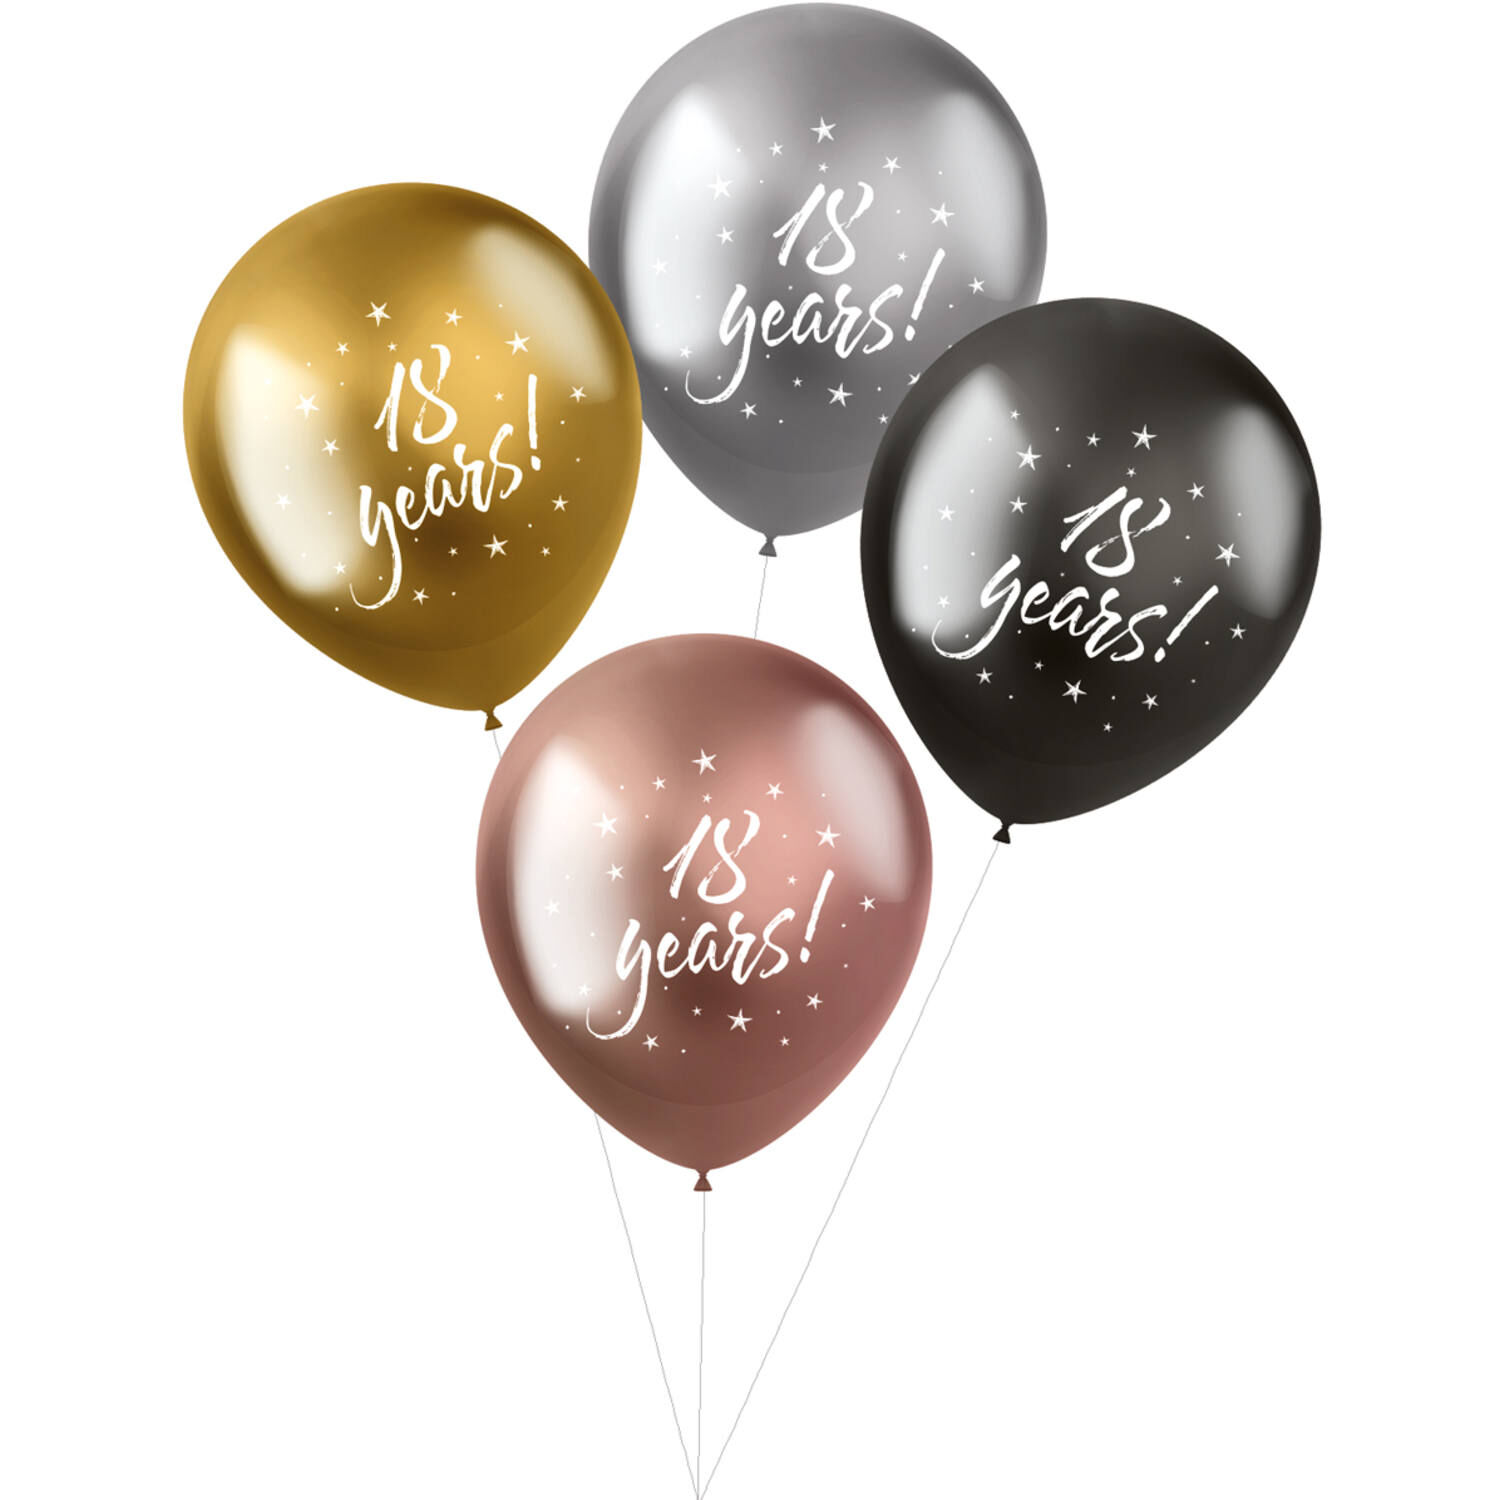 NEU Latex-Luftballons Ultra-Metallic, 33cm Durchmesser, 4 Stck, hochglnzend, Aufdruck: 18 Years